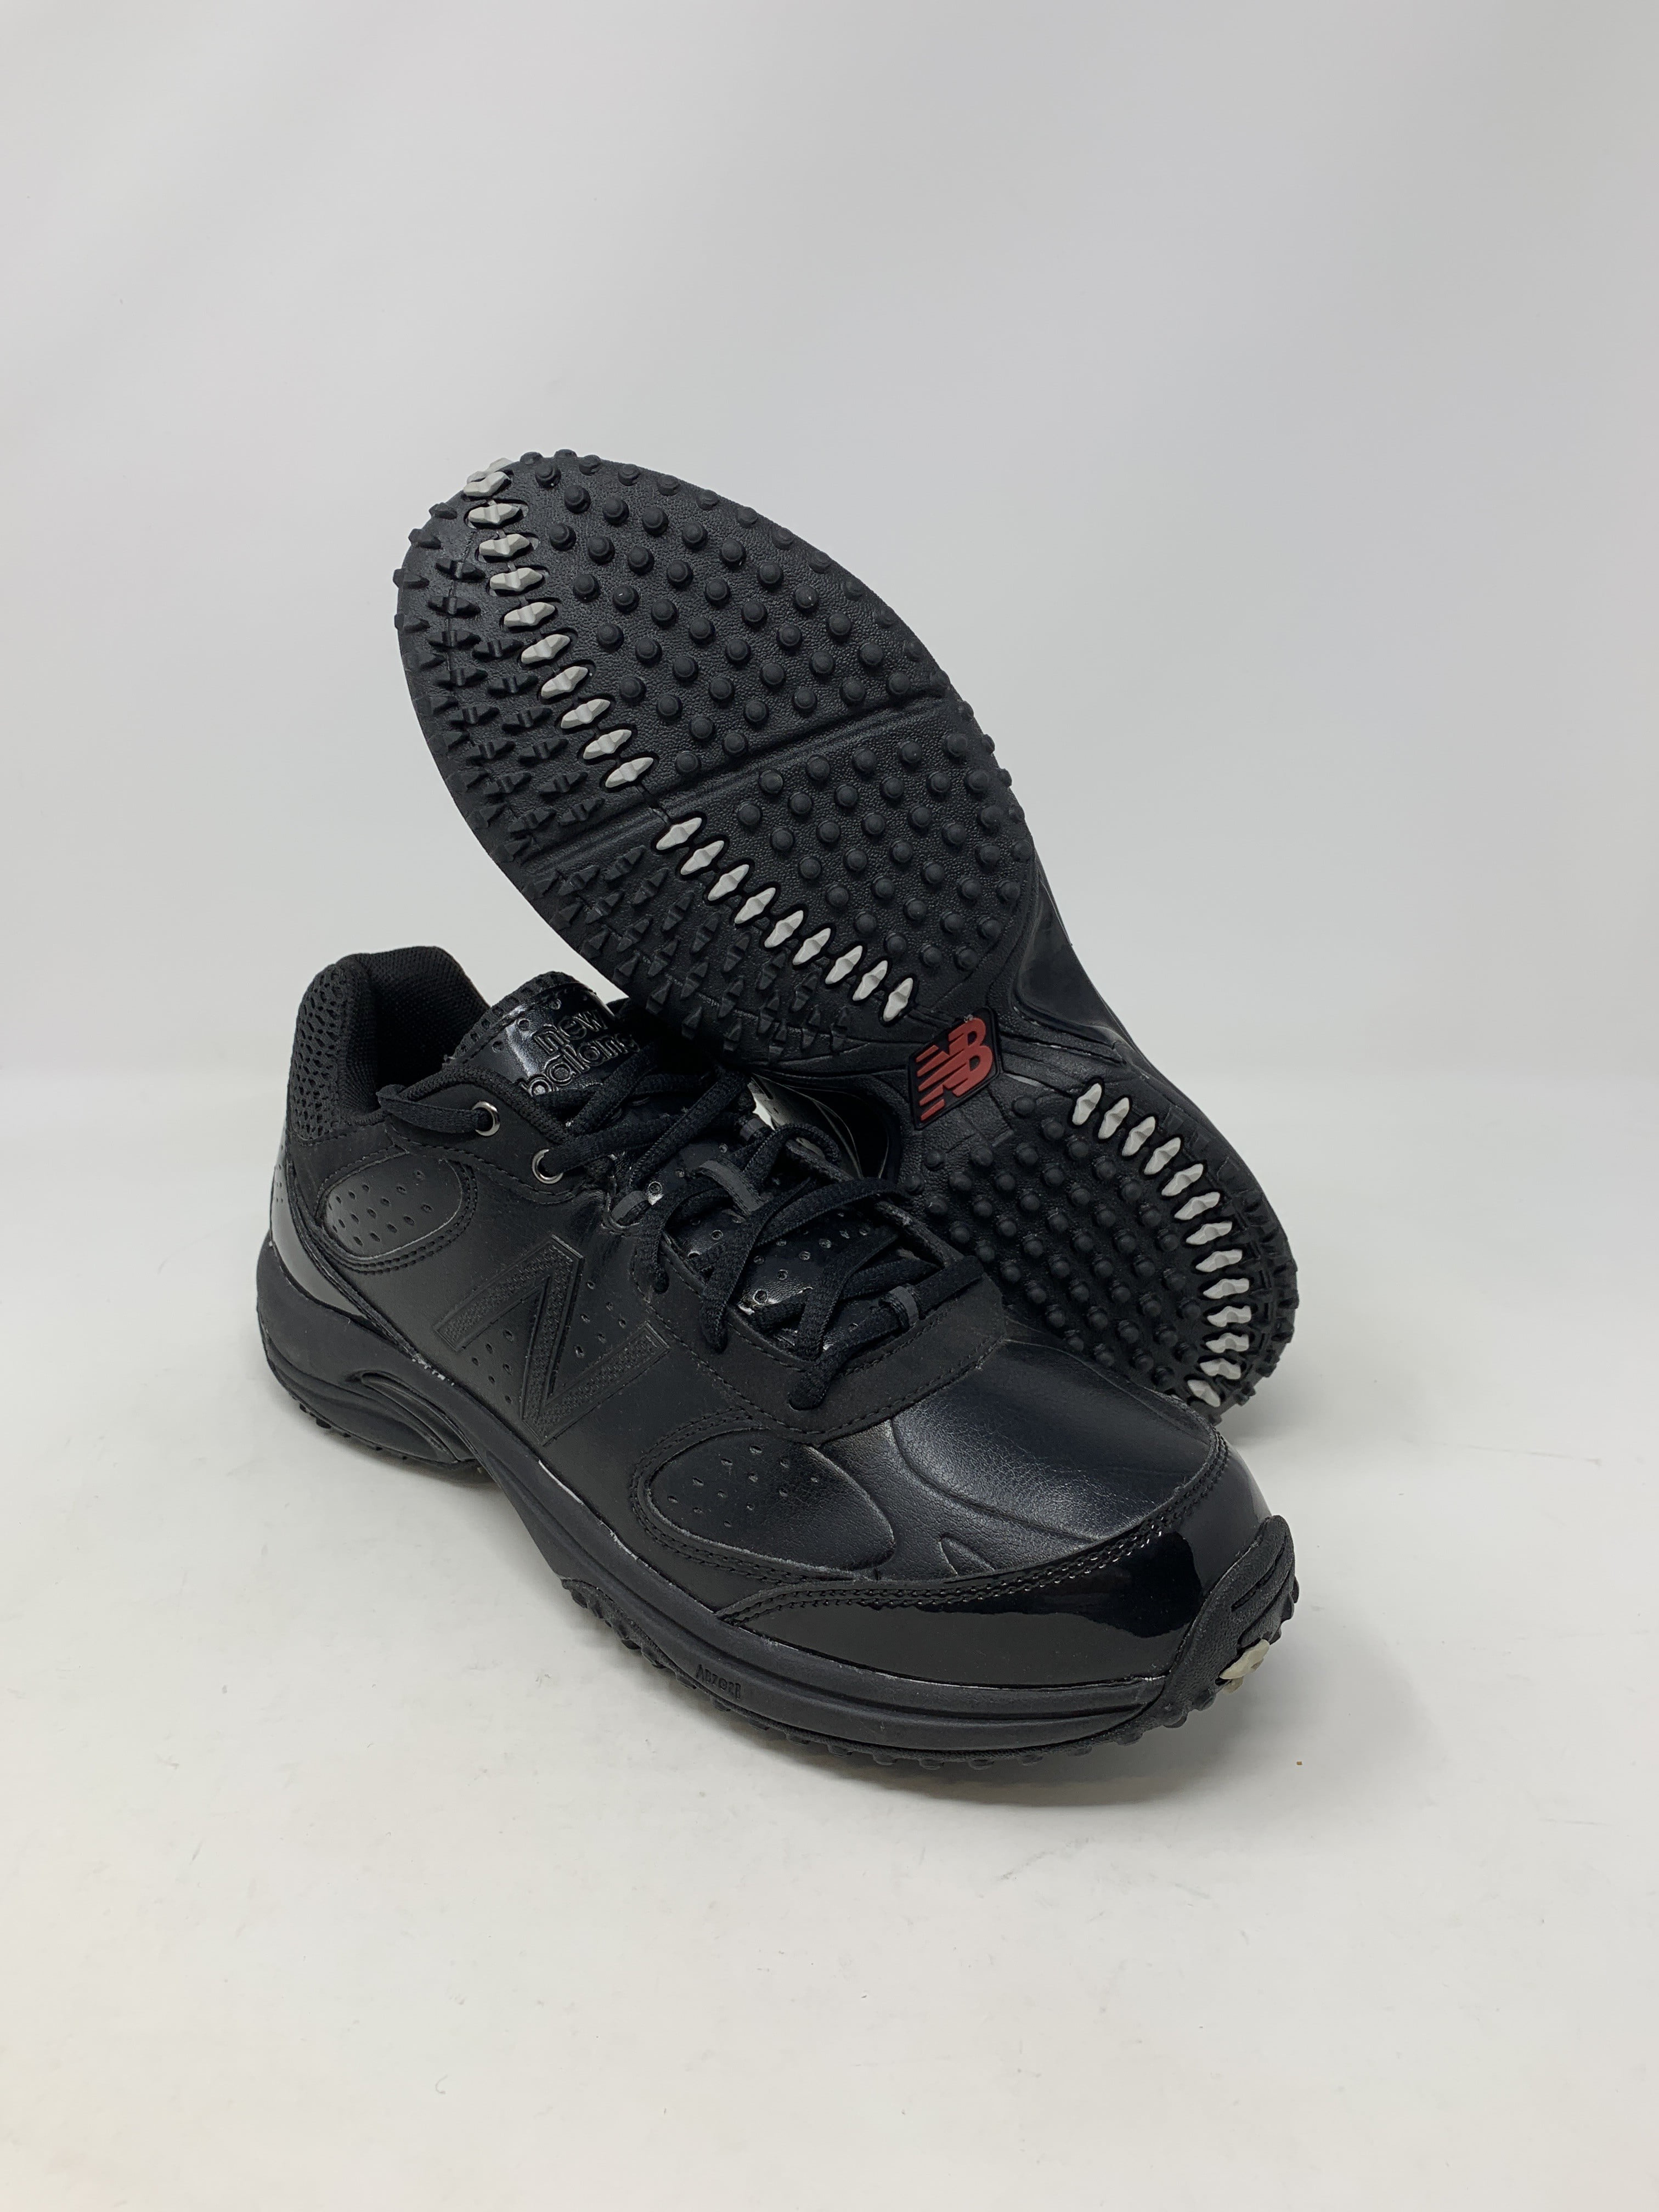 New Balance Umpire Turf Shoes | lupon.gov.ph